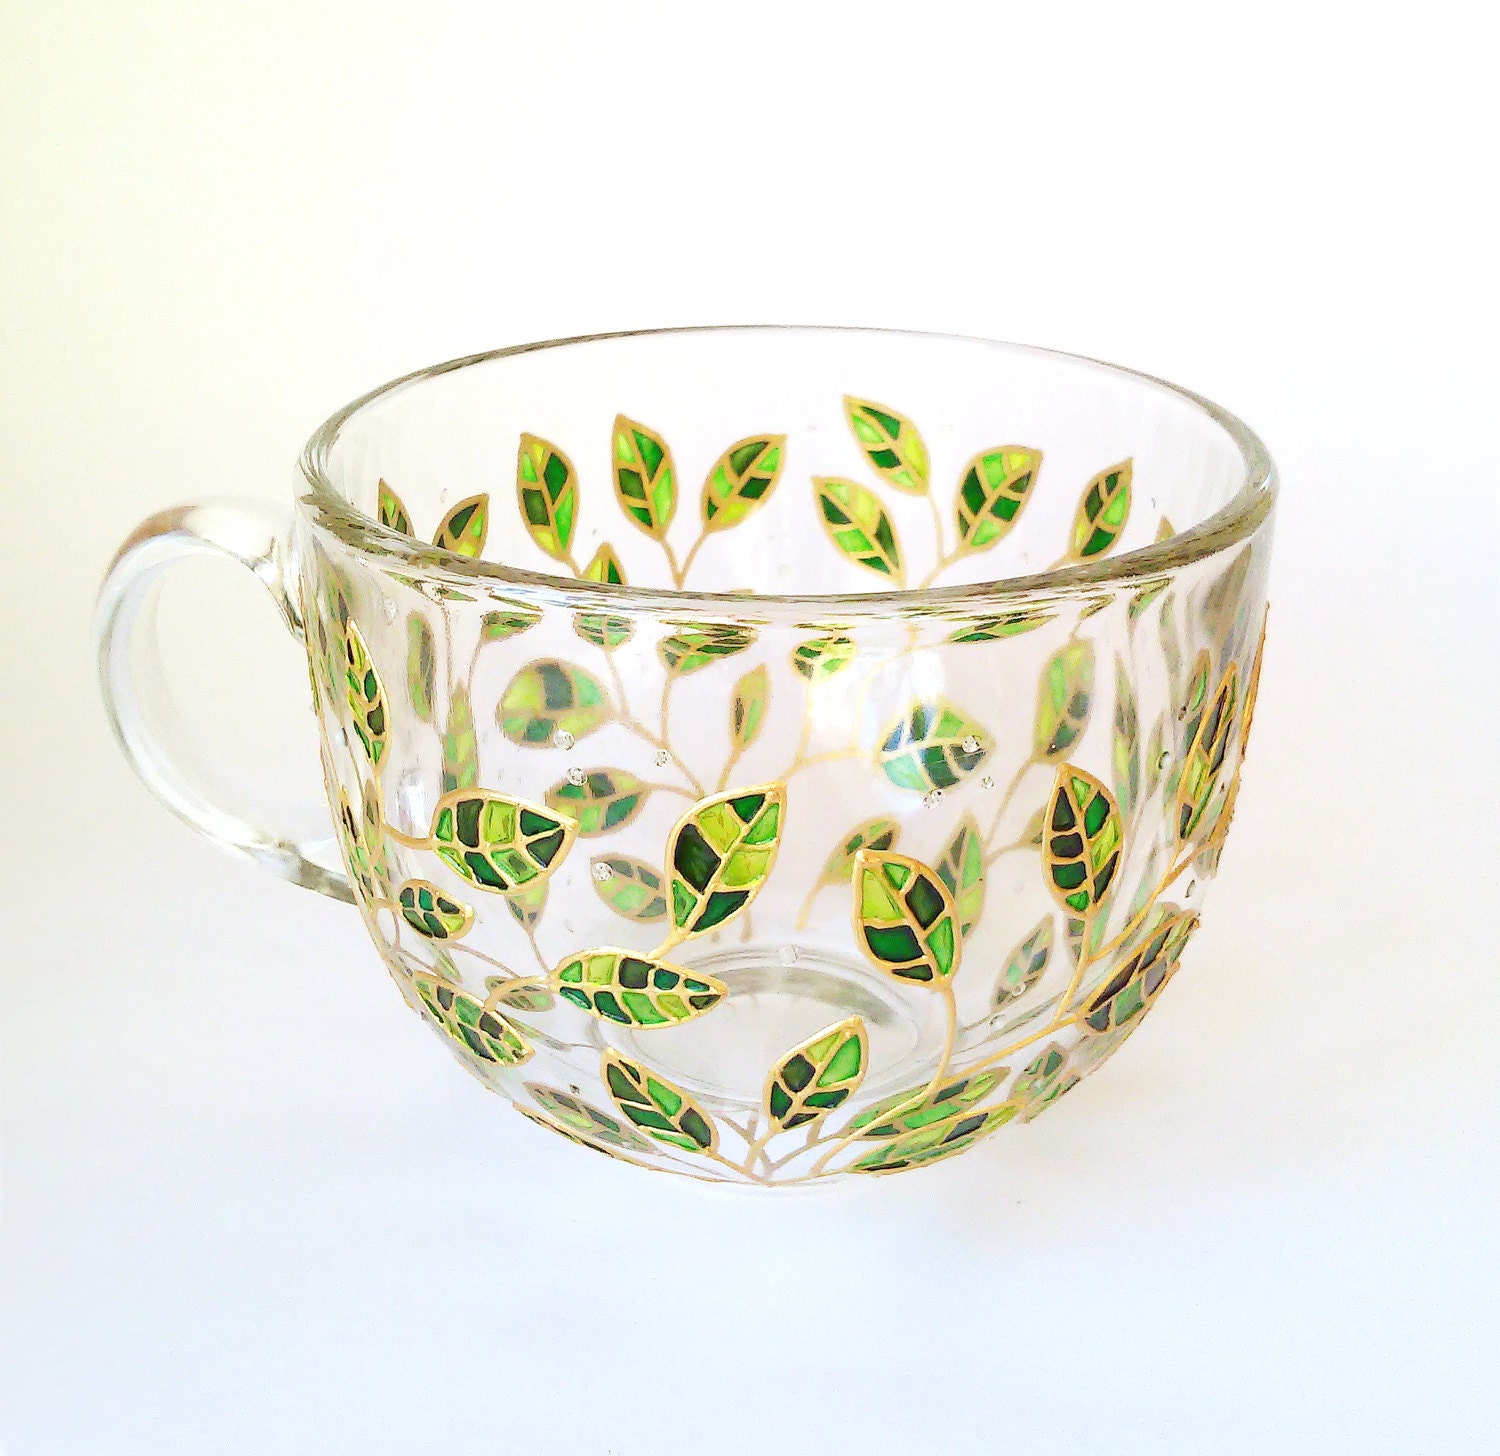 Colored Glass Tea Cup Green Cup & Tea Towel by Art of Tea